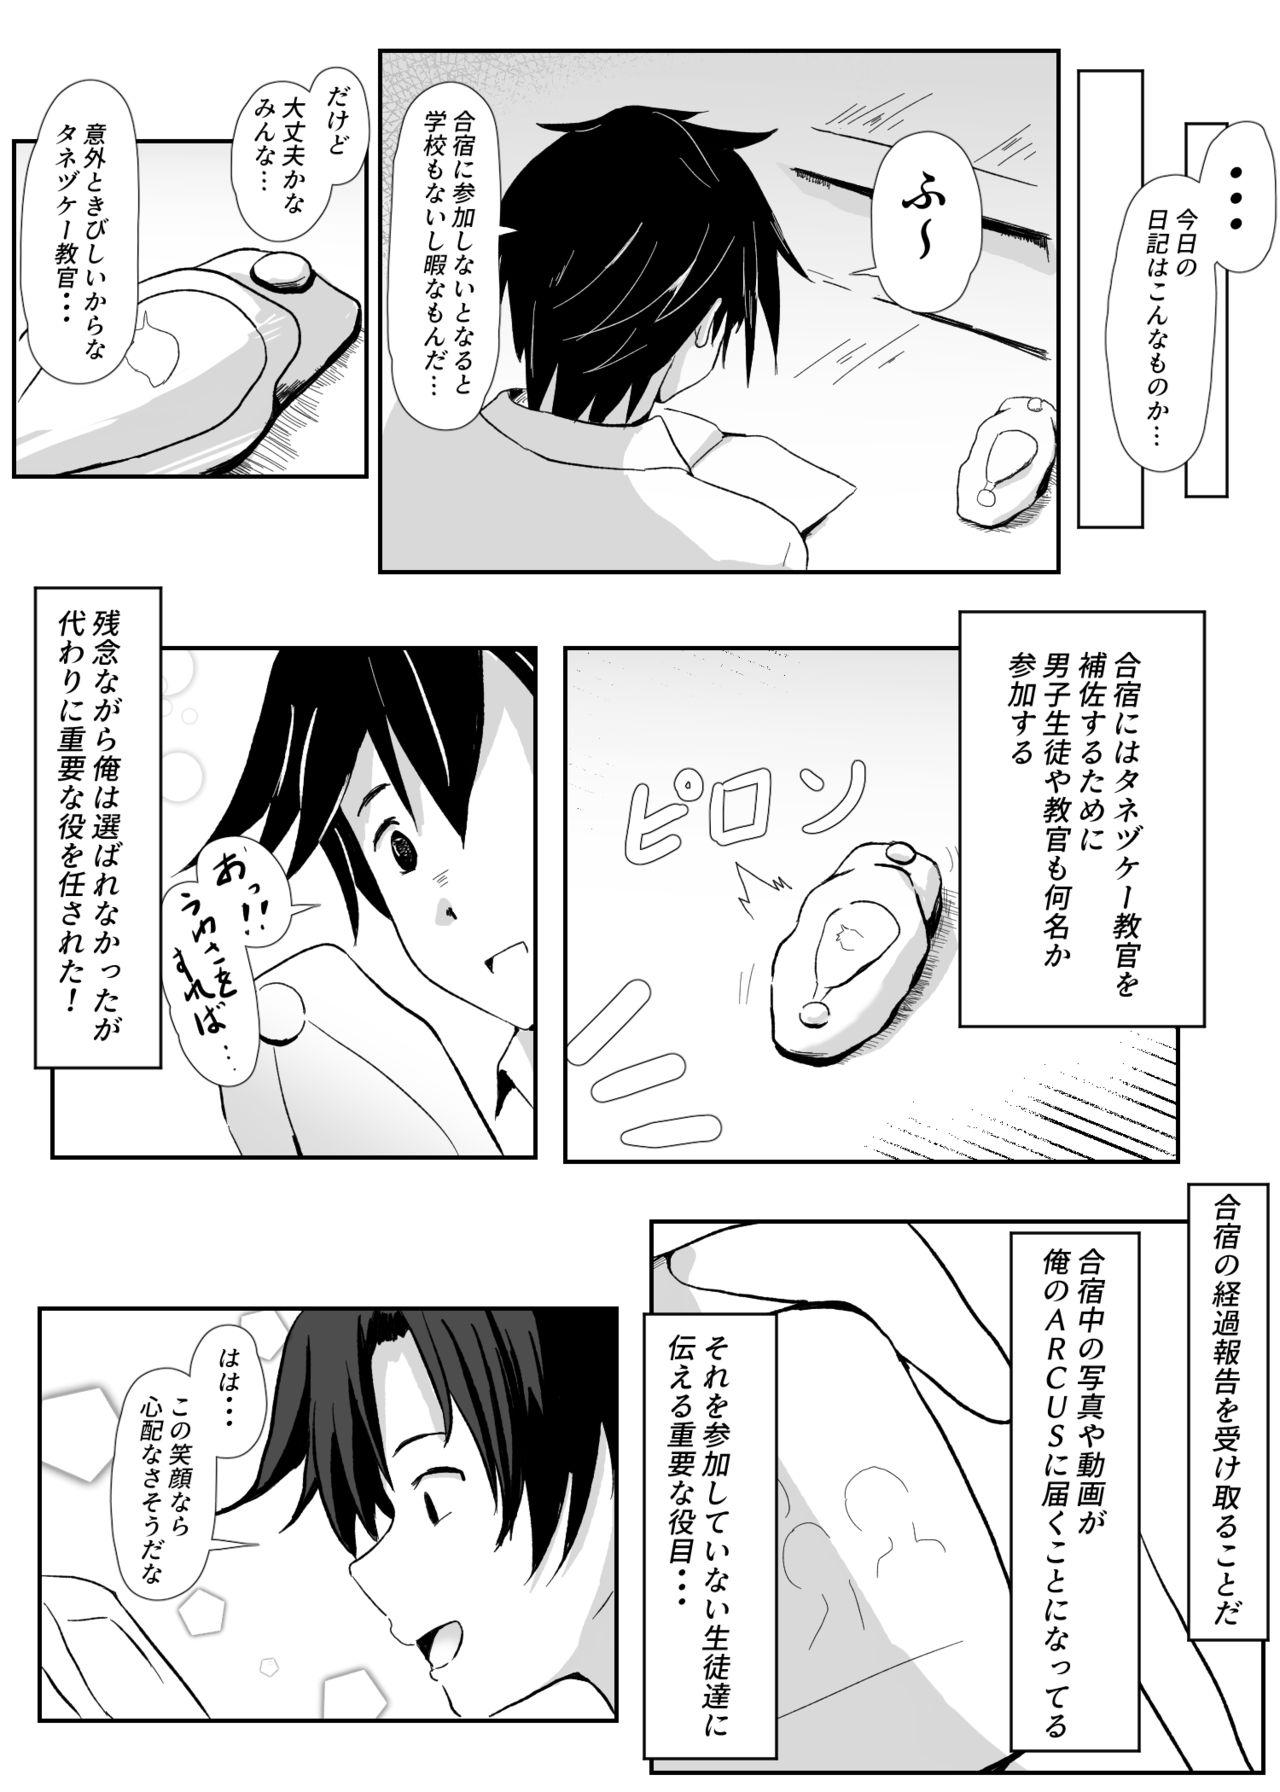 Butt Fuck Sen no Kiseki - The legend of heroes | eiyuu densetsu Furry - Page 8